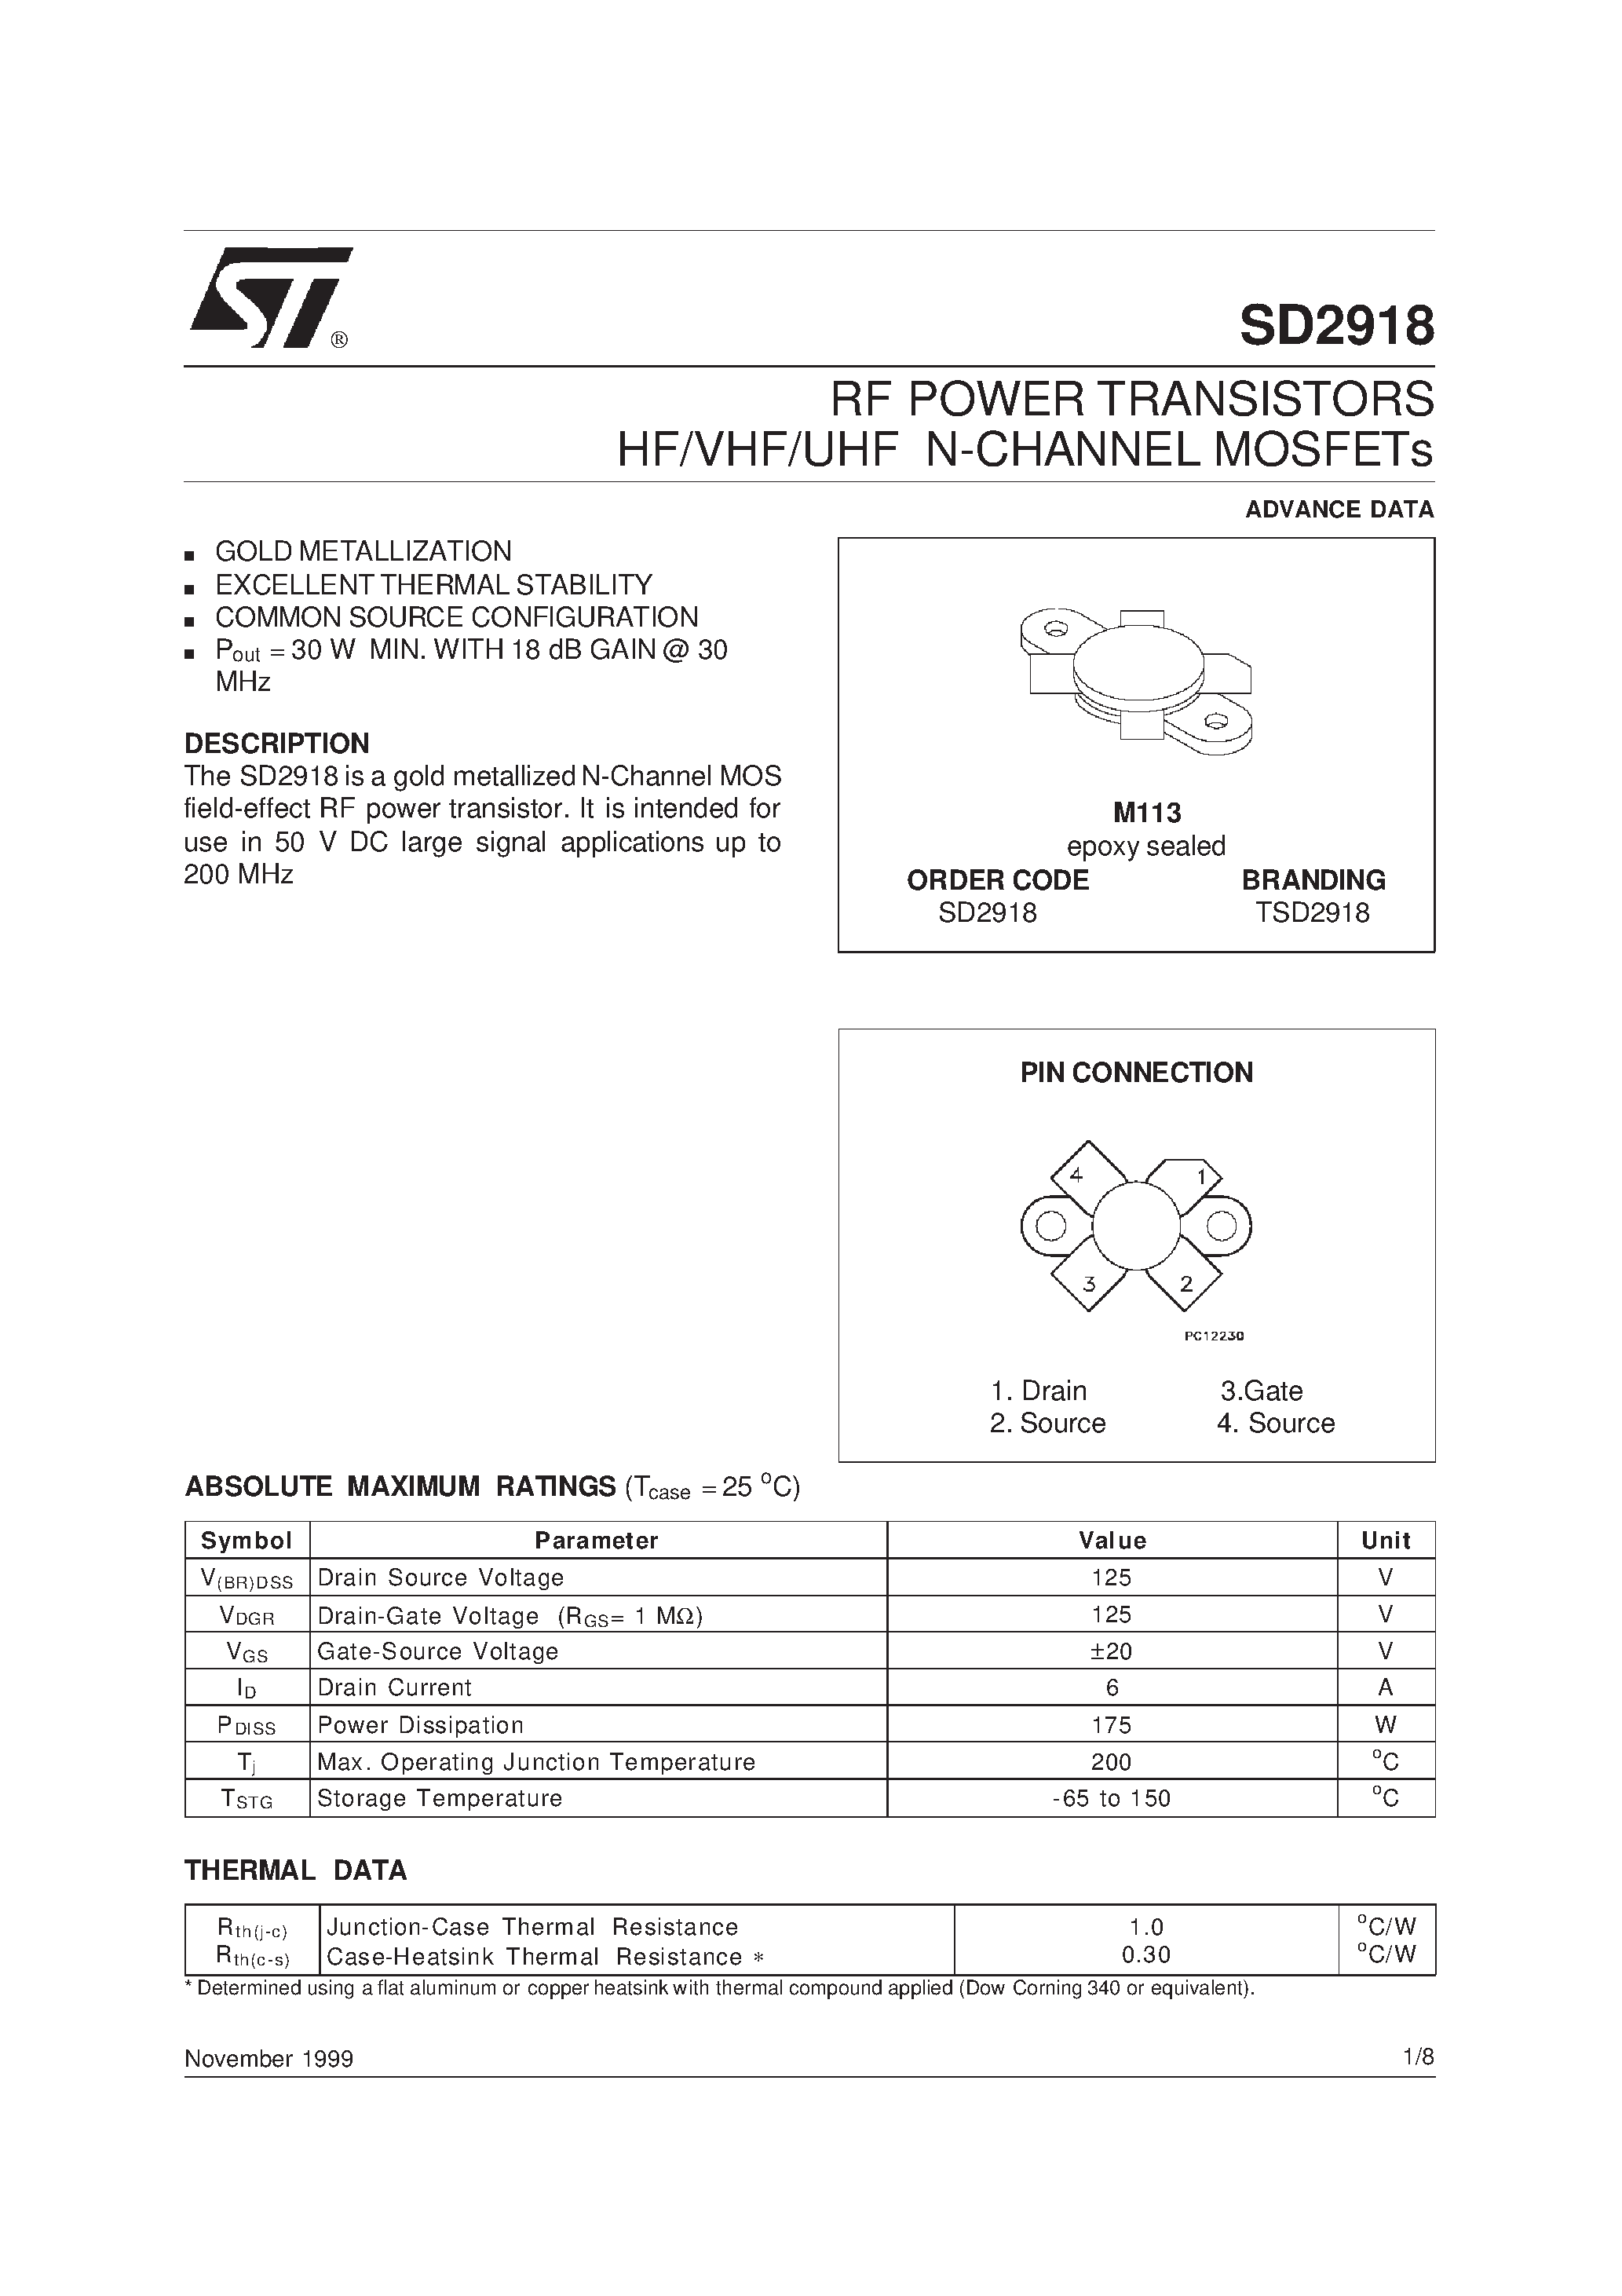 Datasheet SD2918 - RF POWER TRANSISTORS HF/VHF/UHF N-CHANNEL MOSFETs page 1